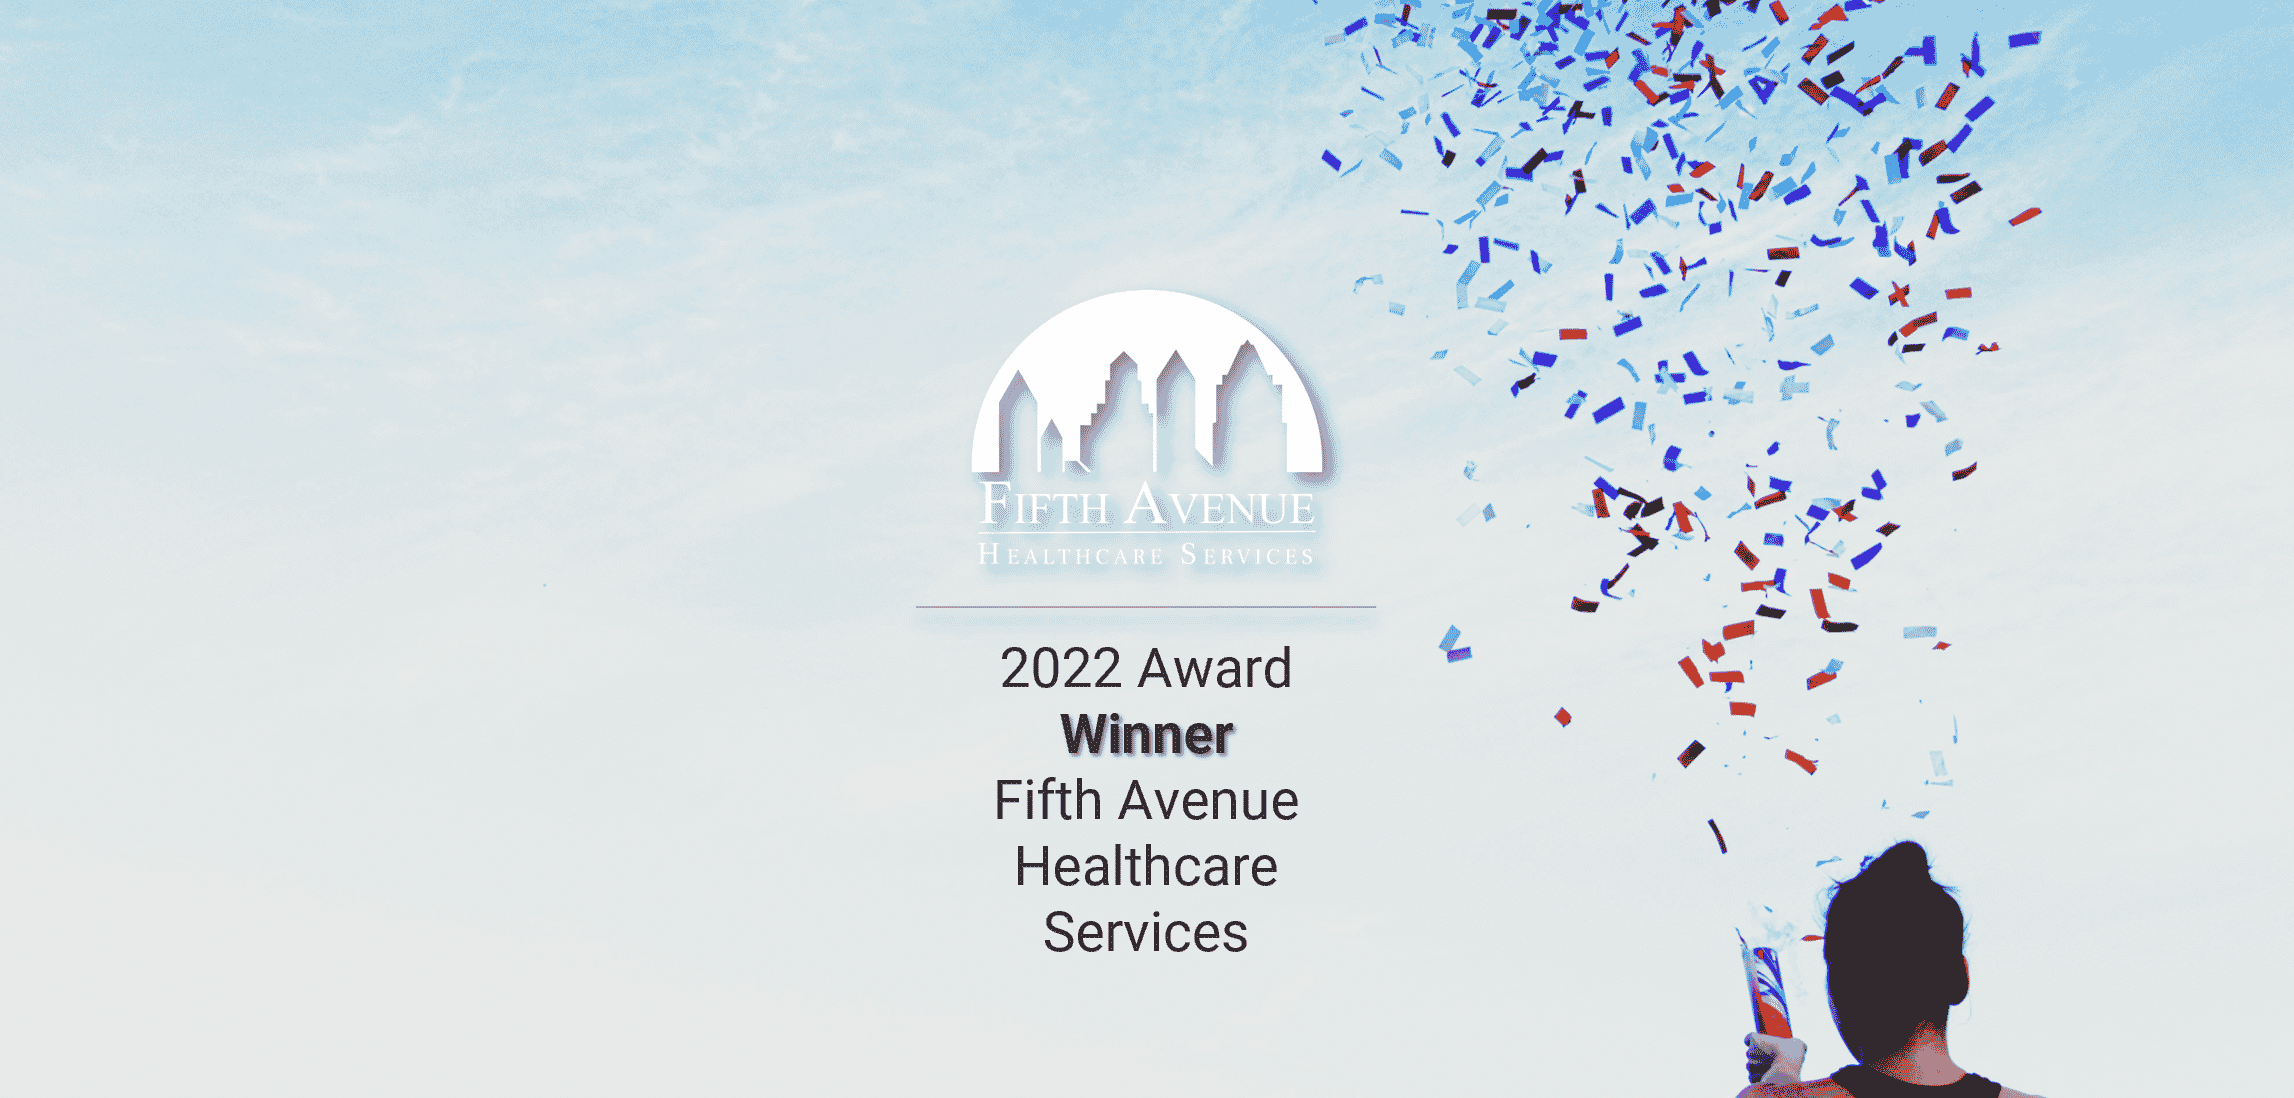 Fifth Avenue Healthcare Services Healthcare 2022 Award Winner